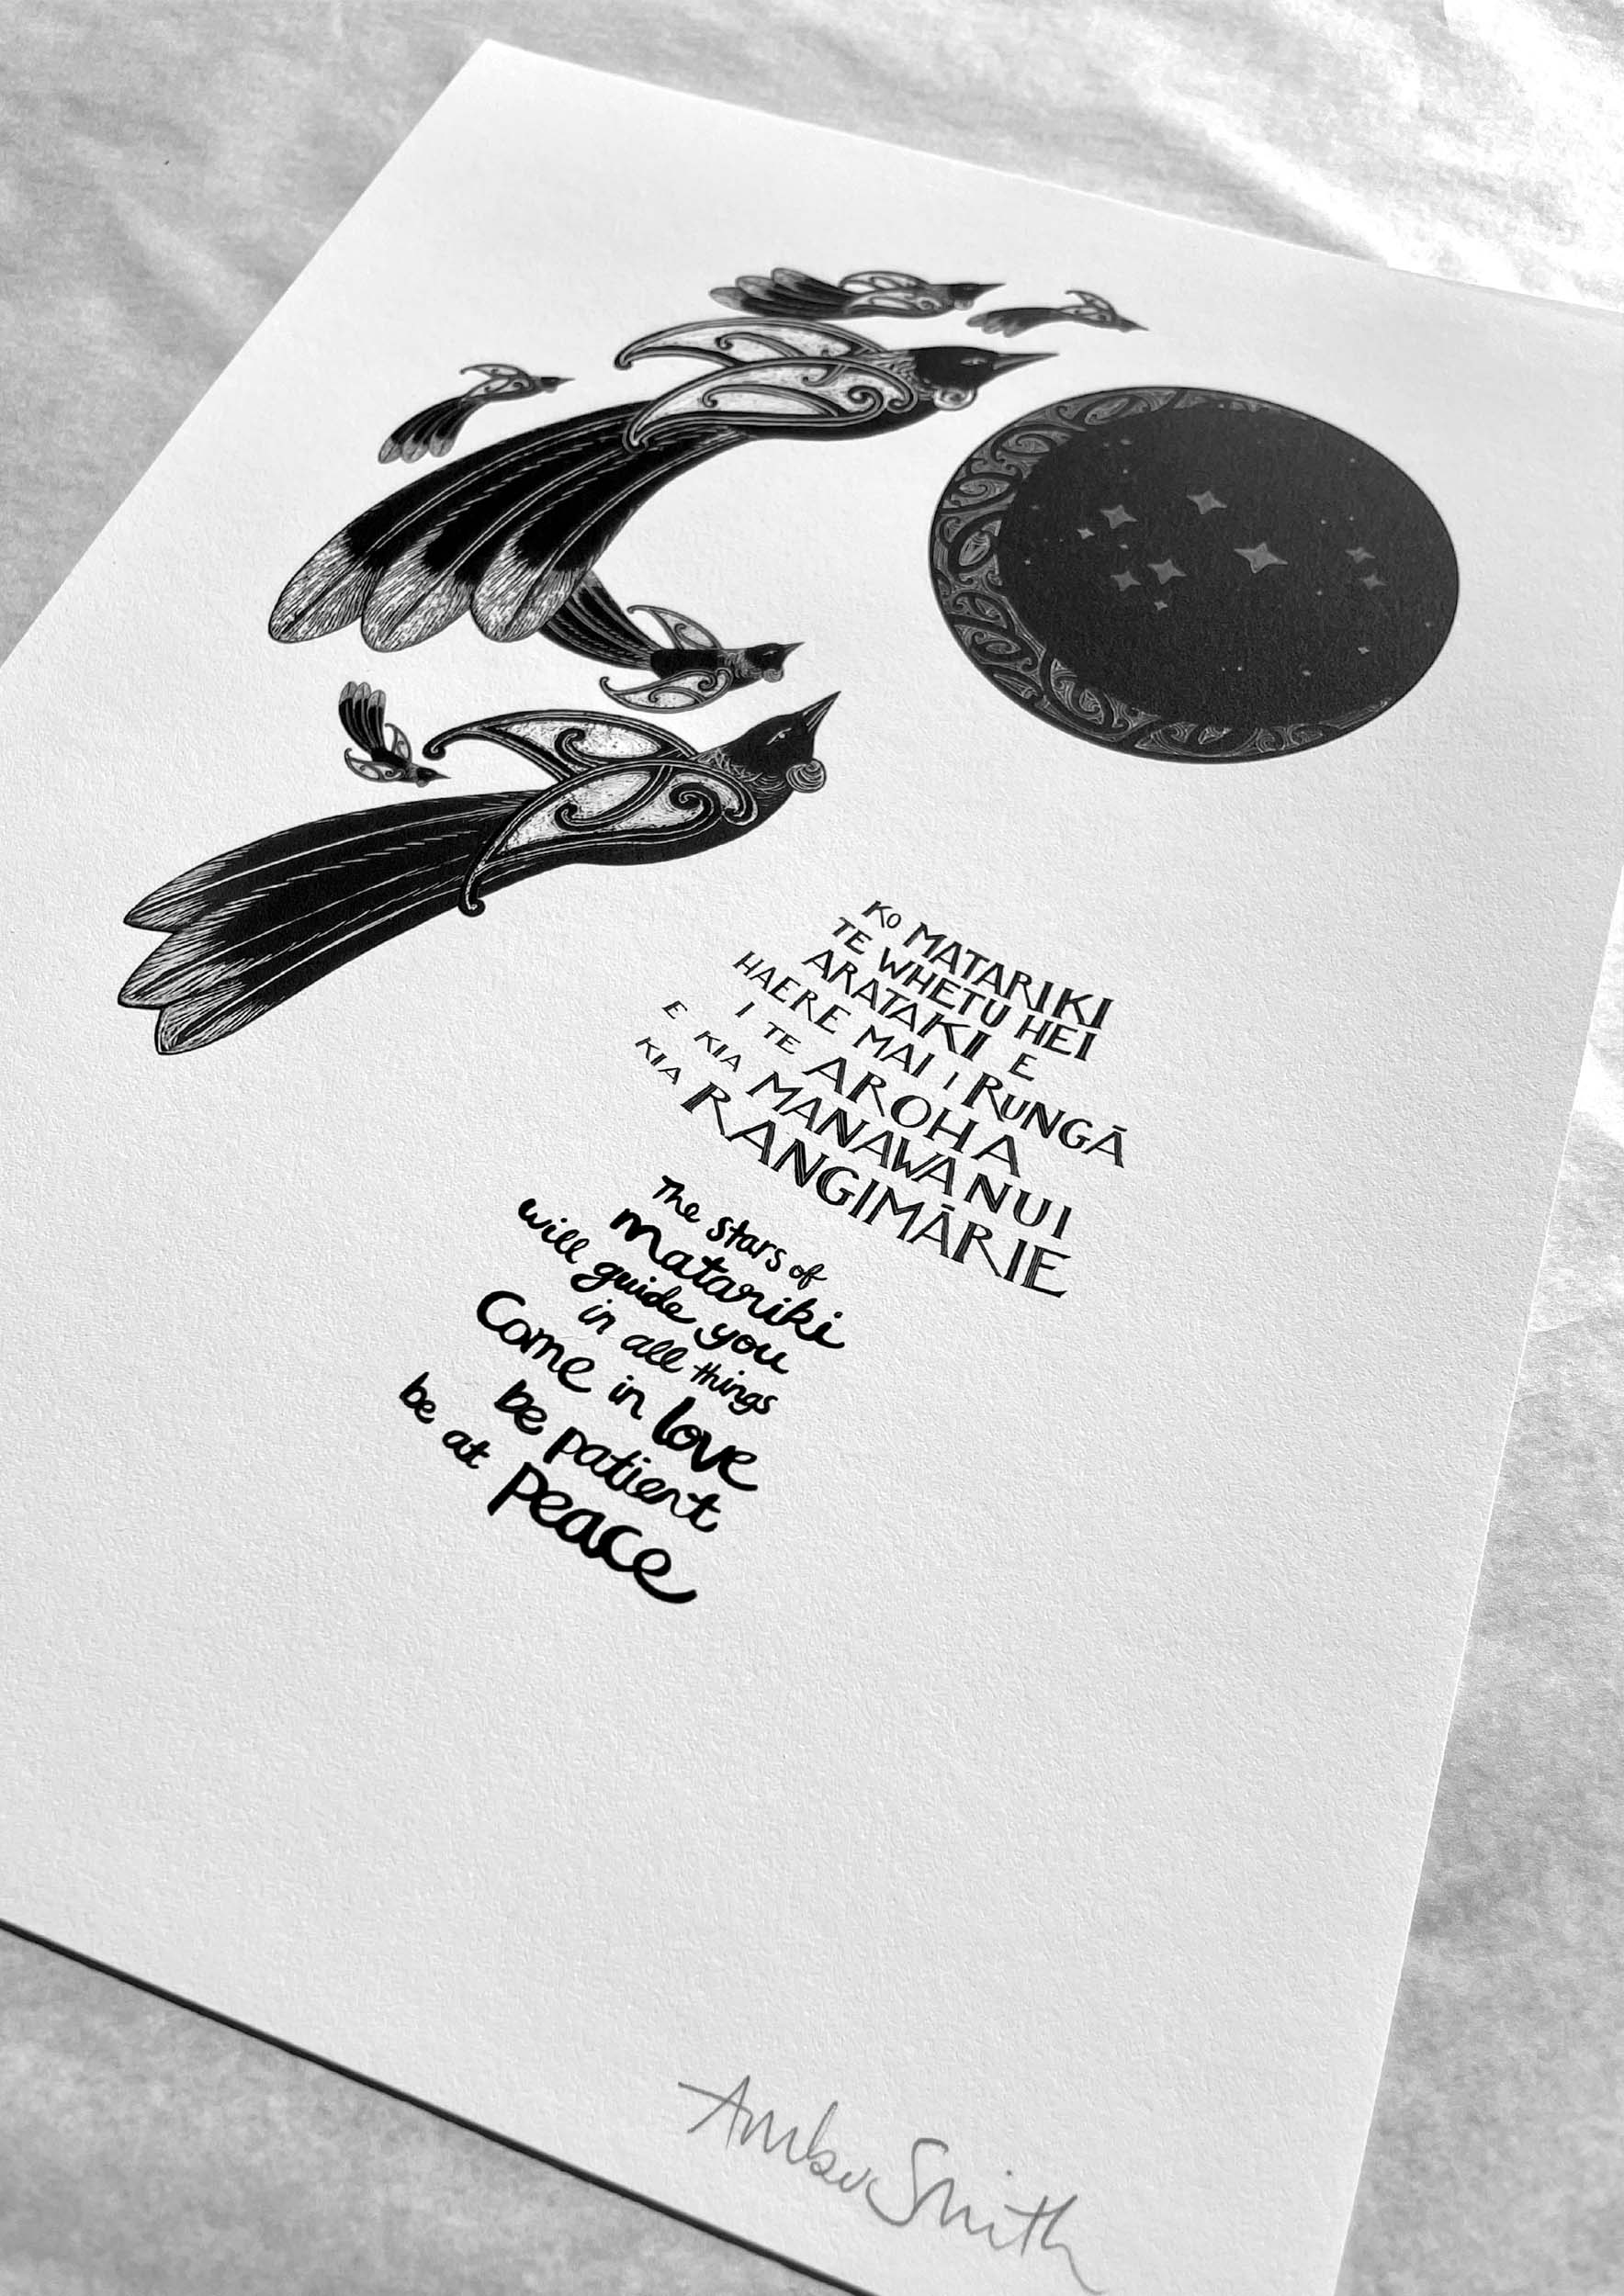 Matariki nz art print, with maori art design tui and stars of matariki. te reo Maori and English translation words. By Amber Smith.